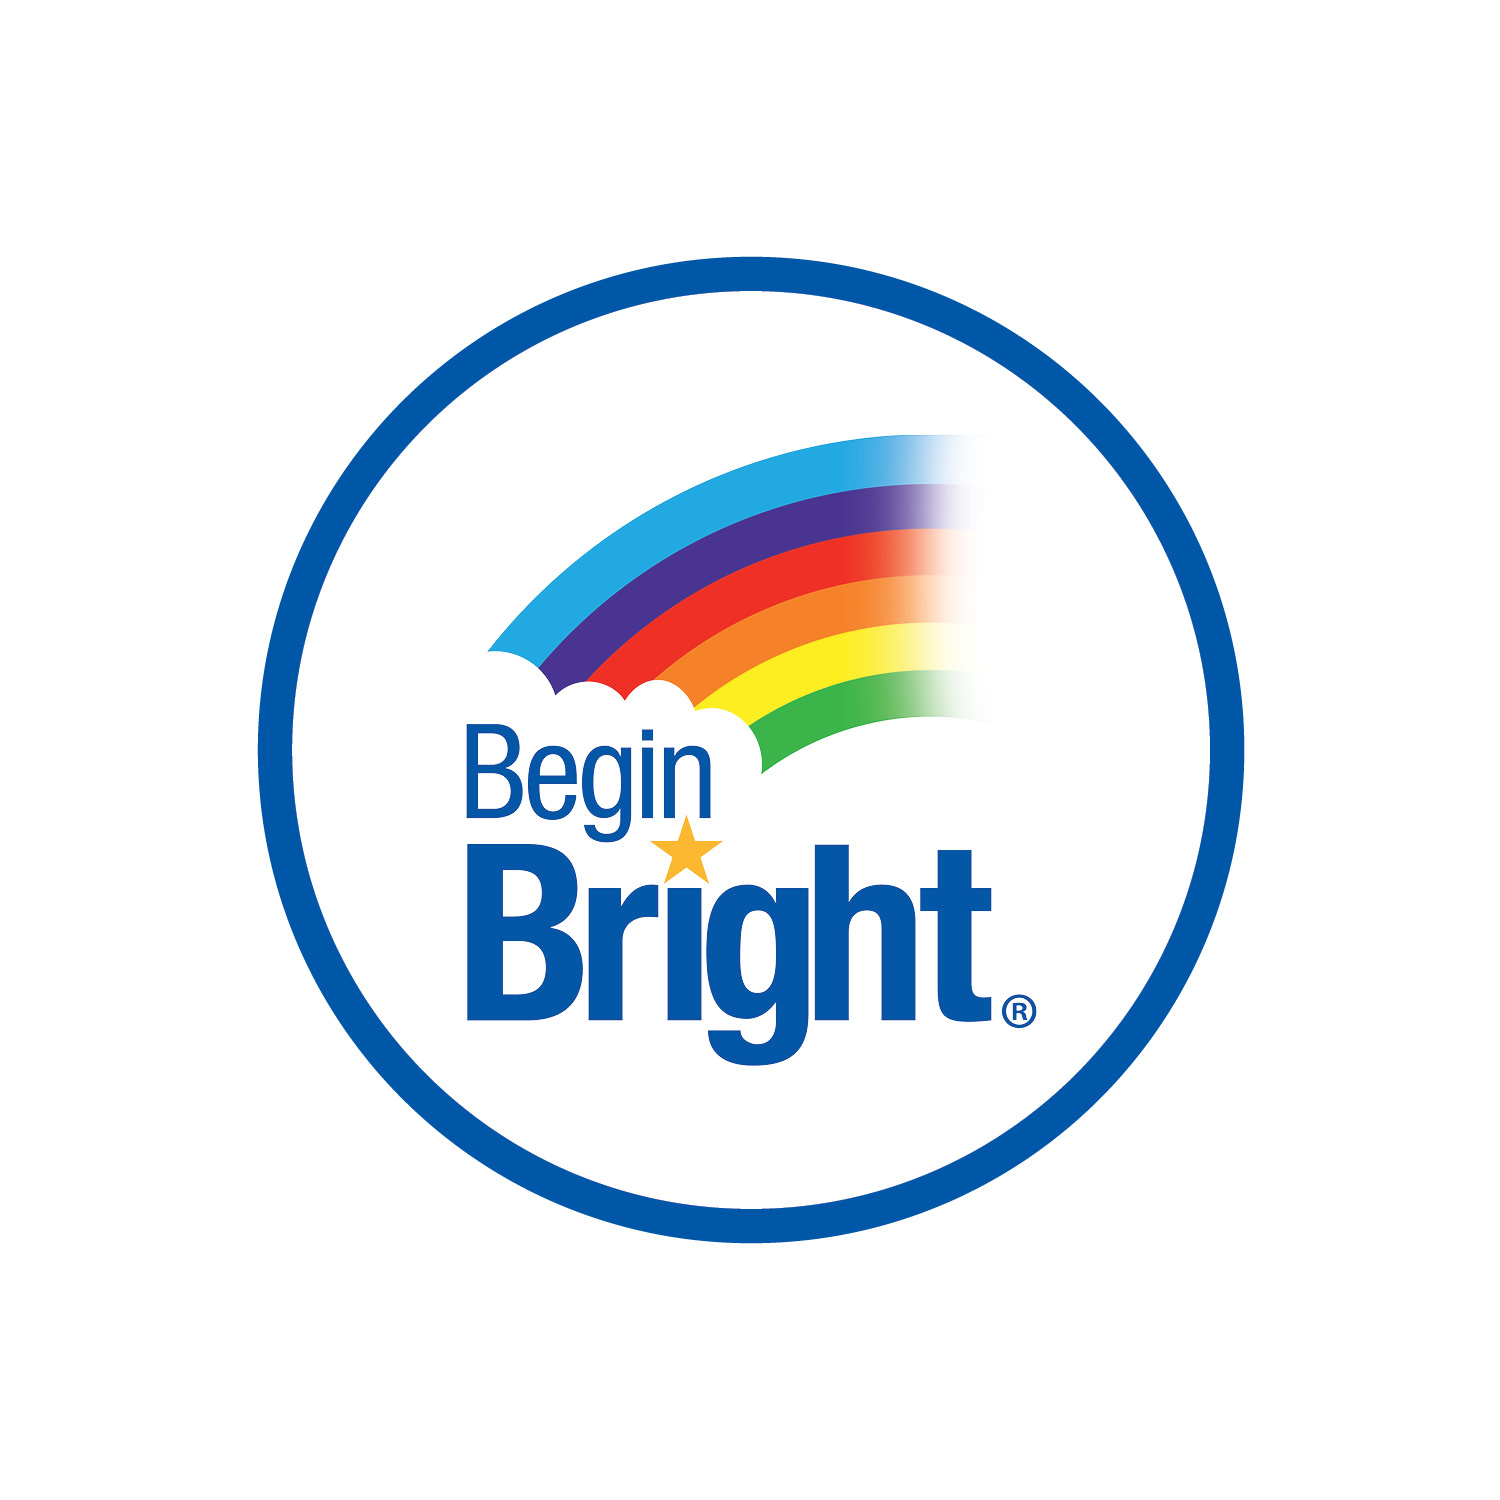 https://www.zesteducation.co.nz/wp-content/uploads/2022/06/Begin-Bright-logo.jpeg